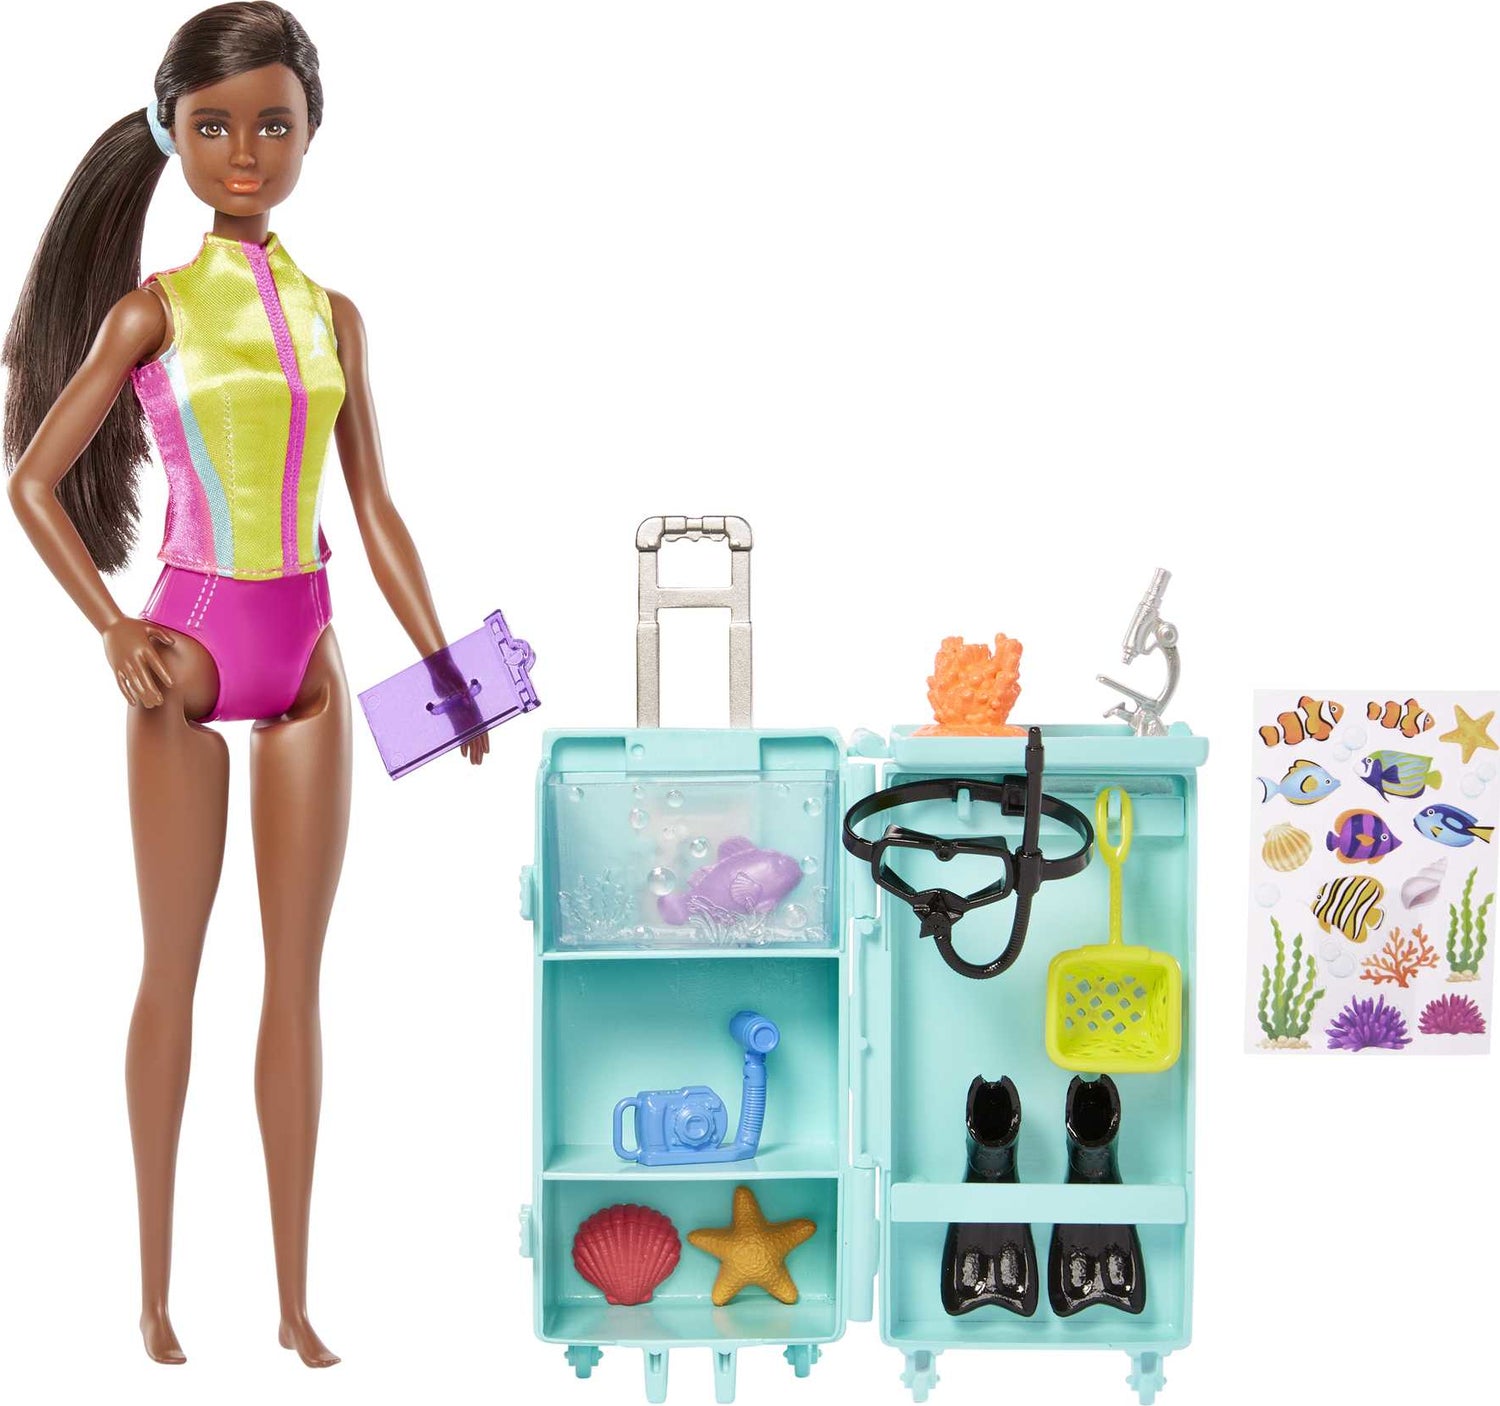 Barbie Marine Biologist Doll and Playset (Dark Skin Tone)